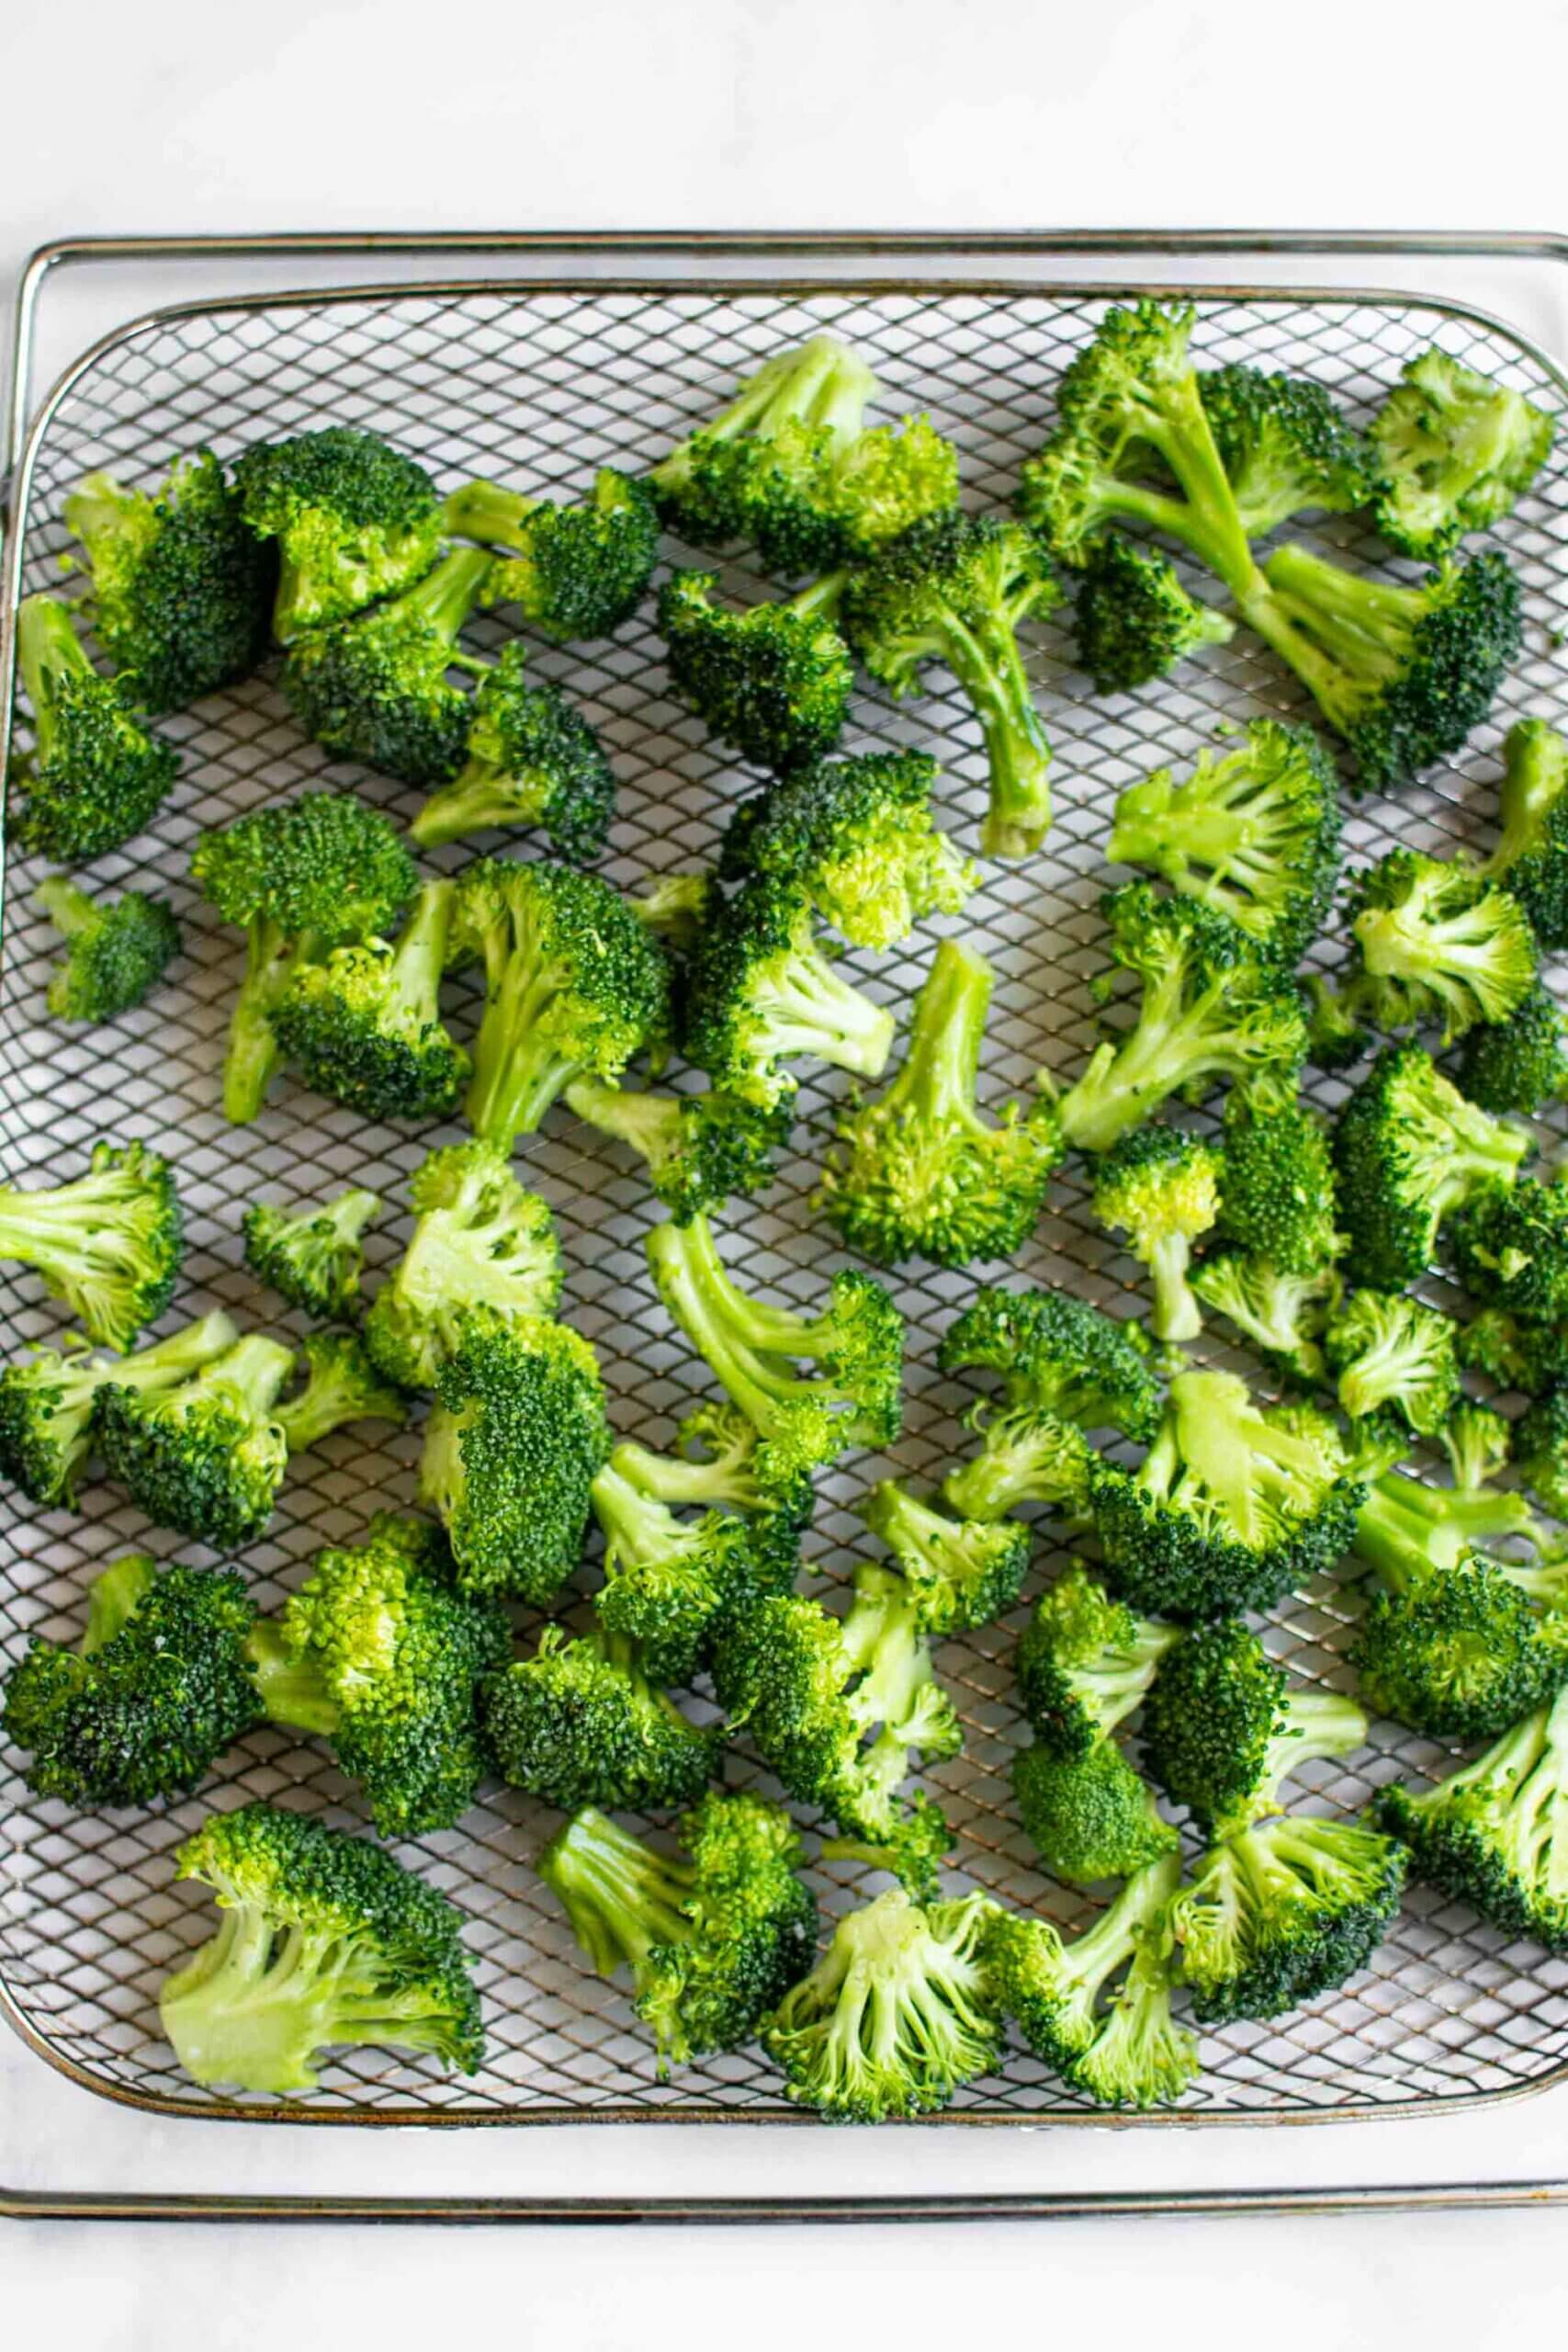 Air fryer roasted broccoli on air fryer tray